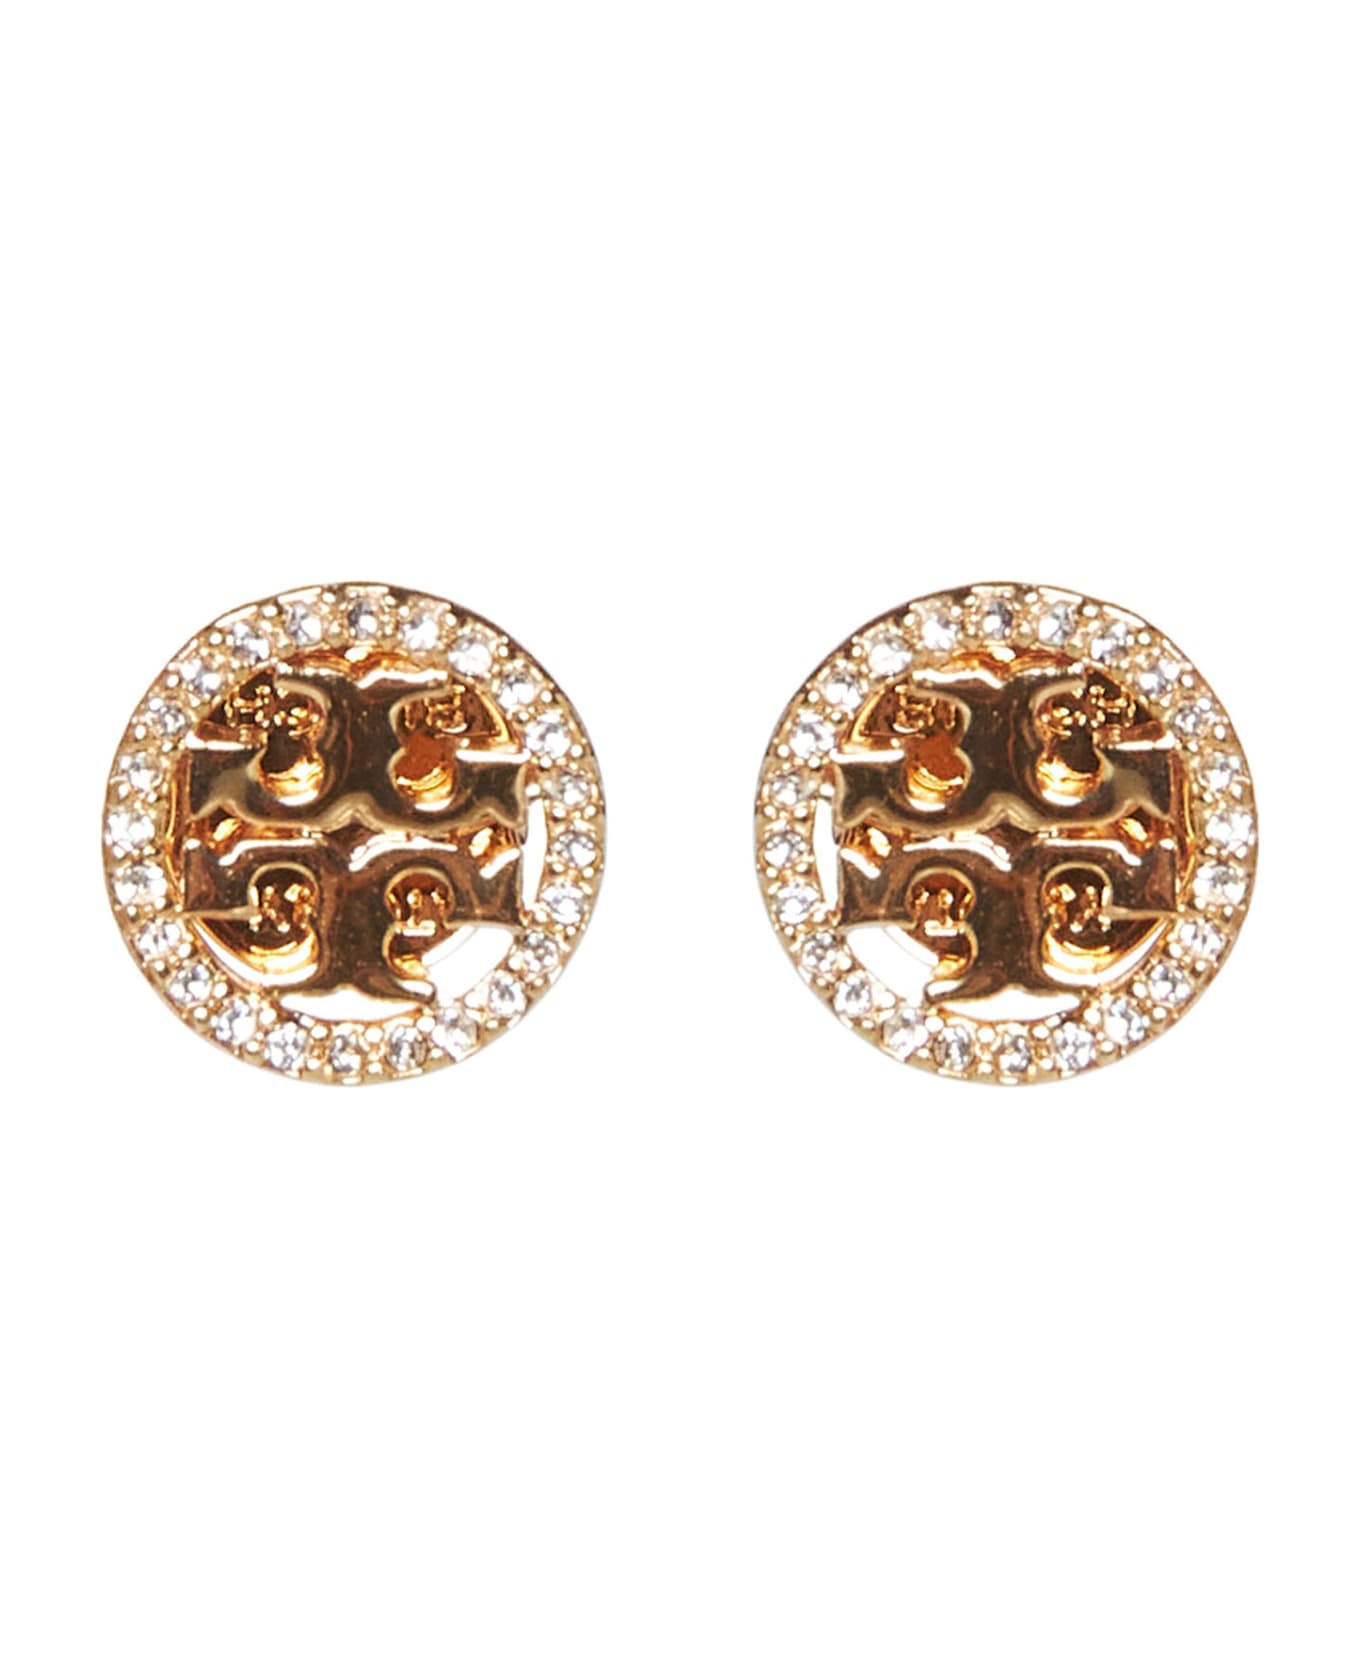 Tory Burch Miller Earrings - Tory gold / crystal